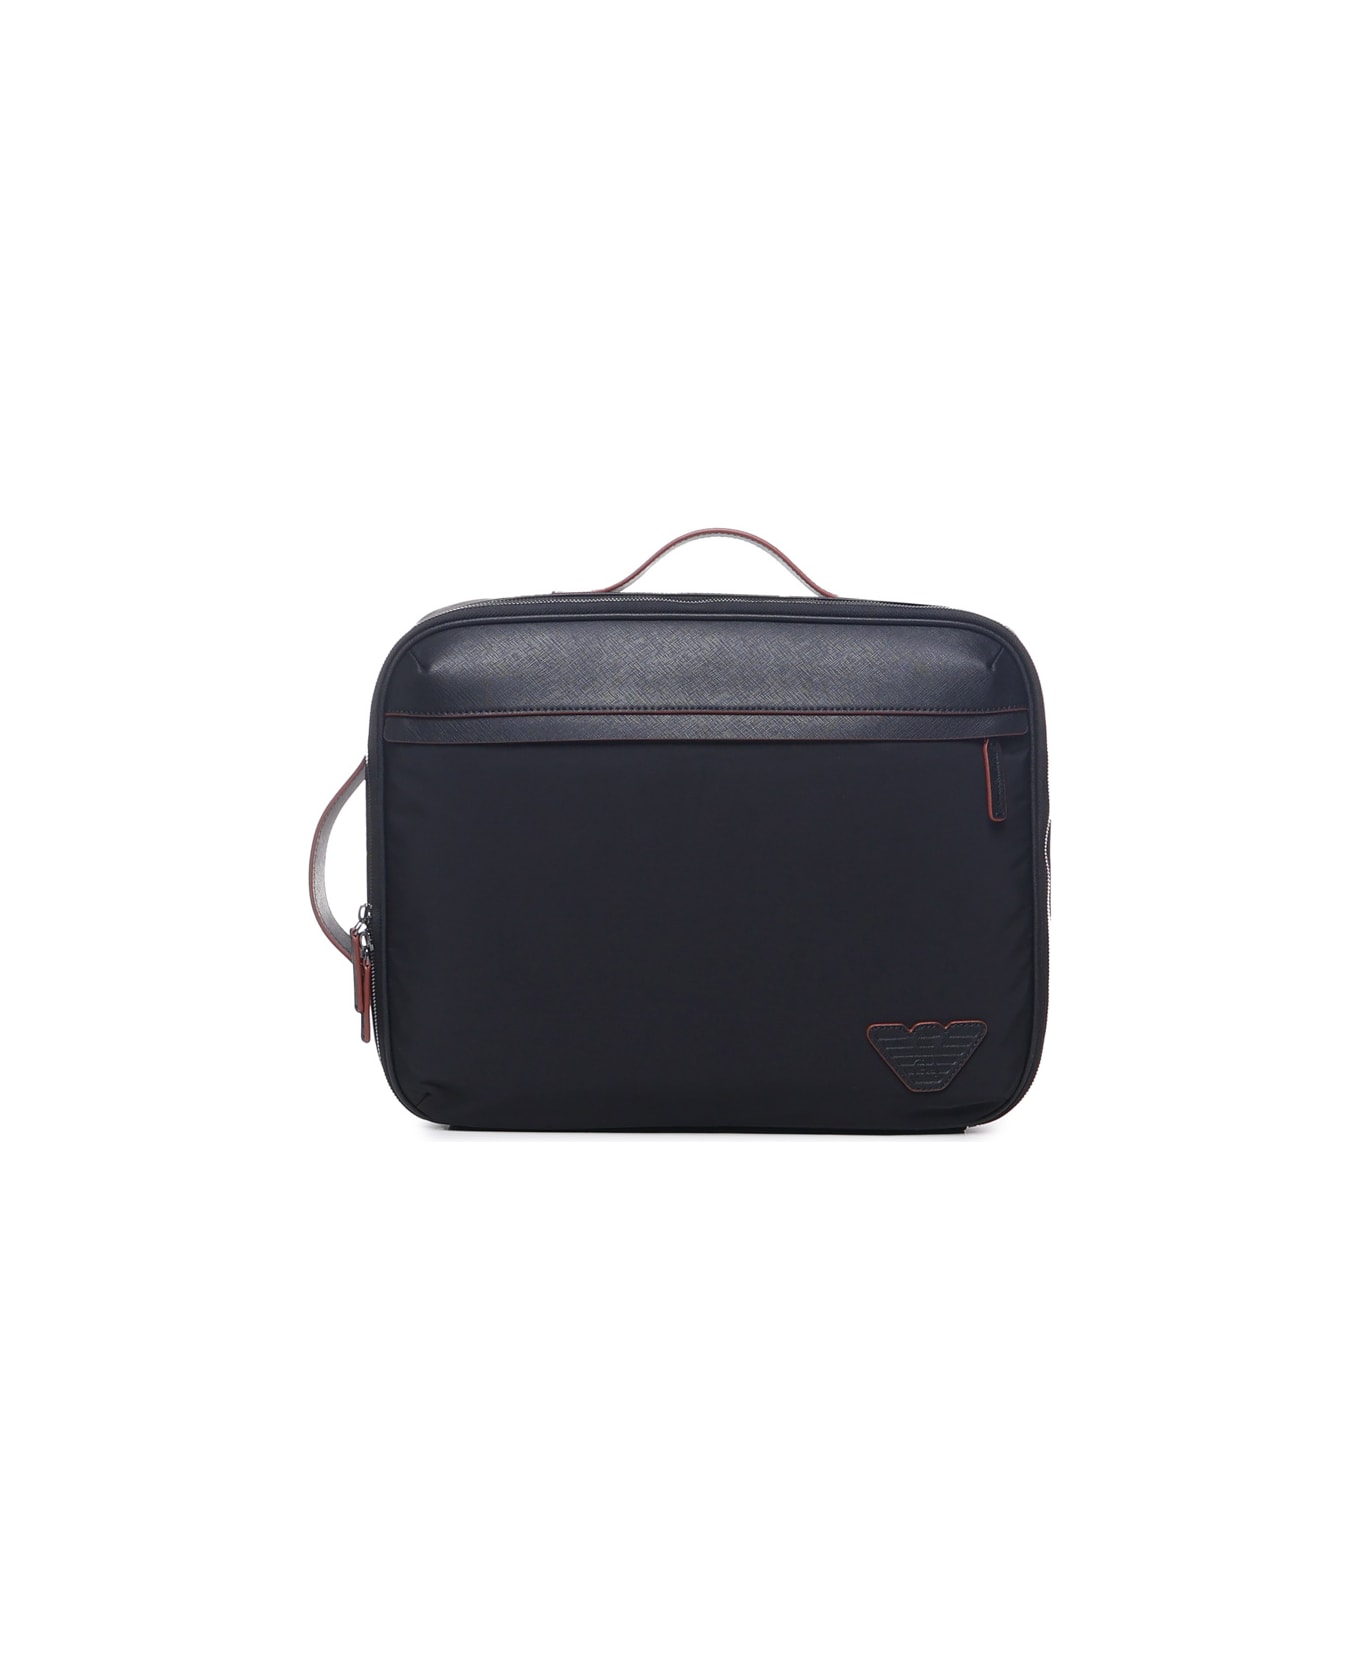 Giorgio Armani Business Bag With Shoulder Straps In Regenerated Saffiano And Recycled Nylon Giorgio Armani バッグ